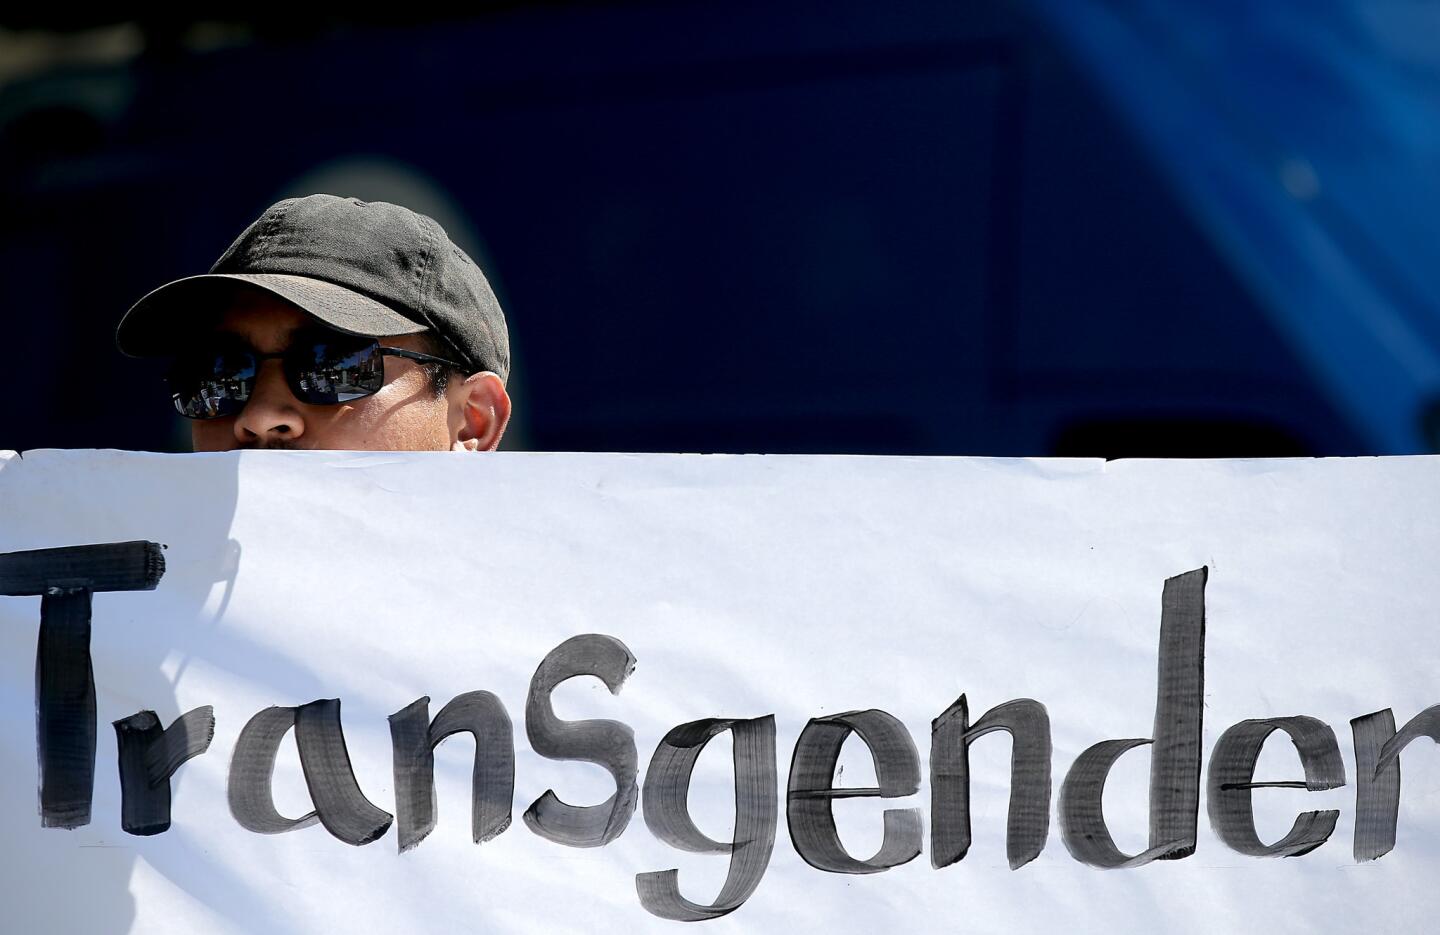 Protesting Trump's transgender military ban